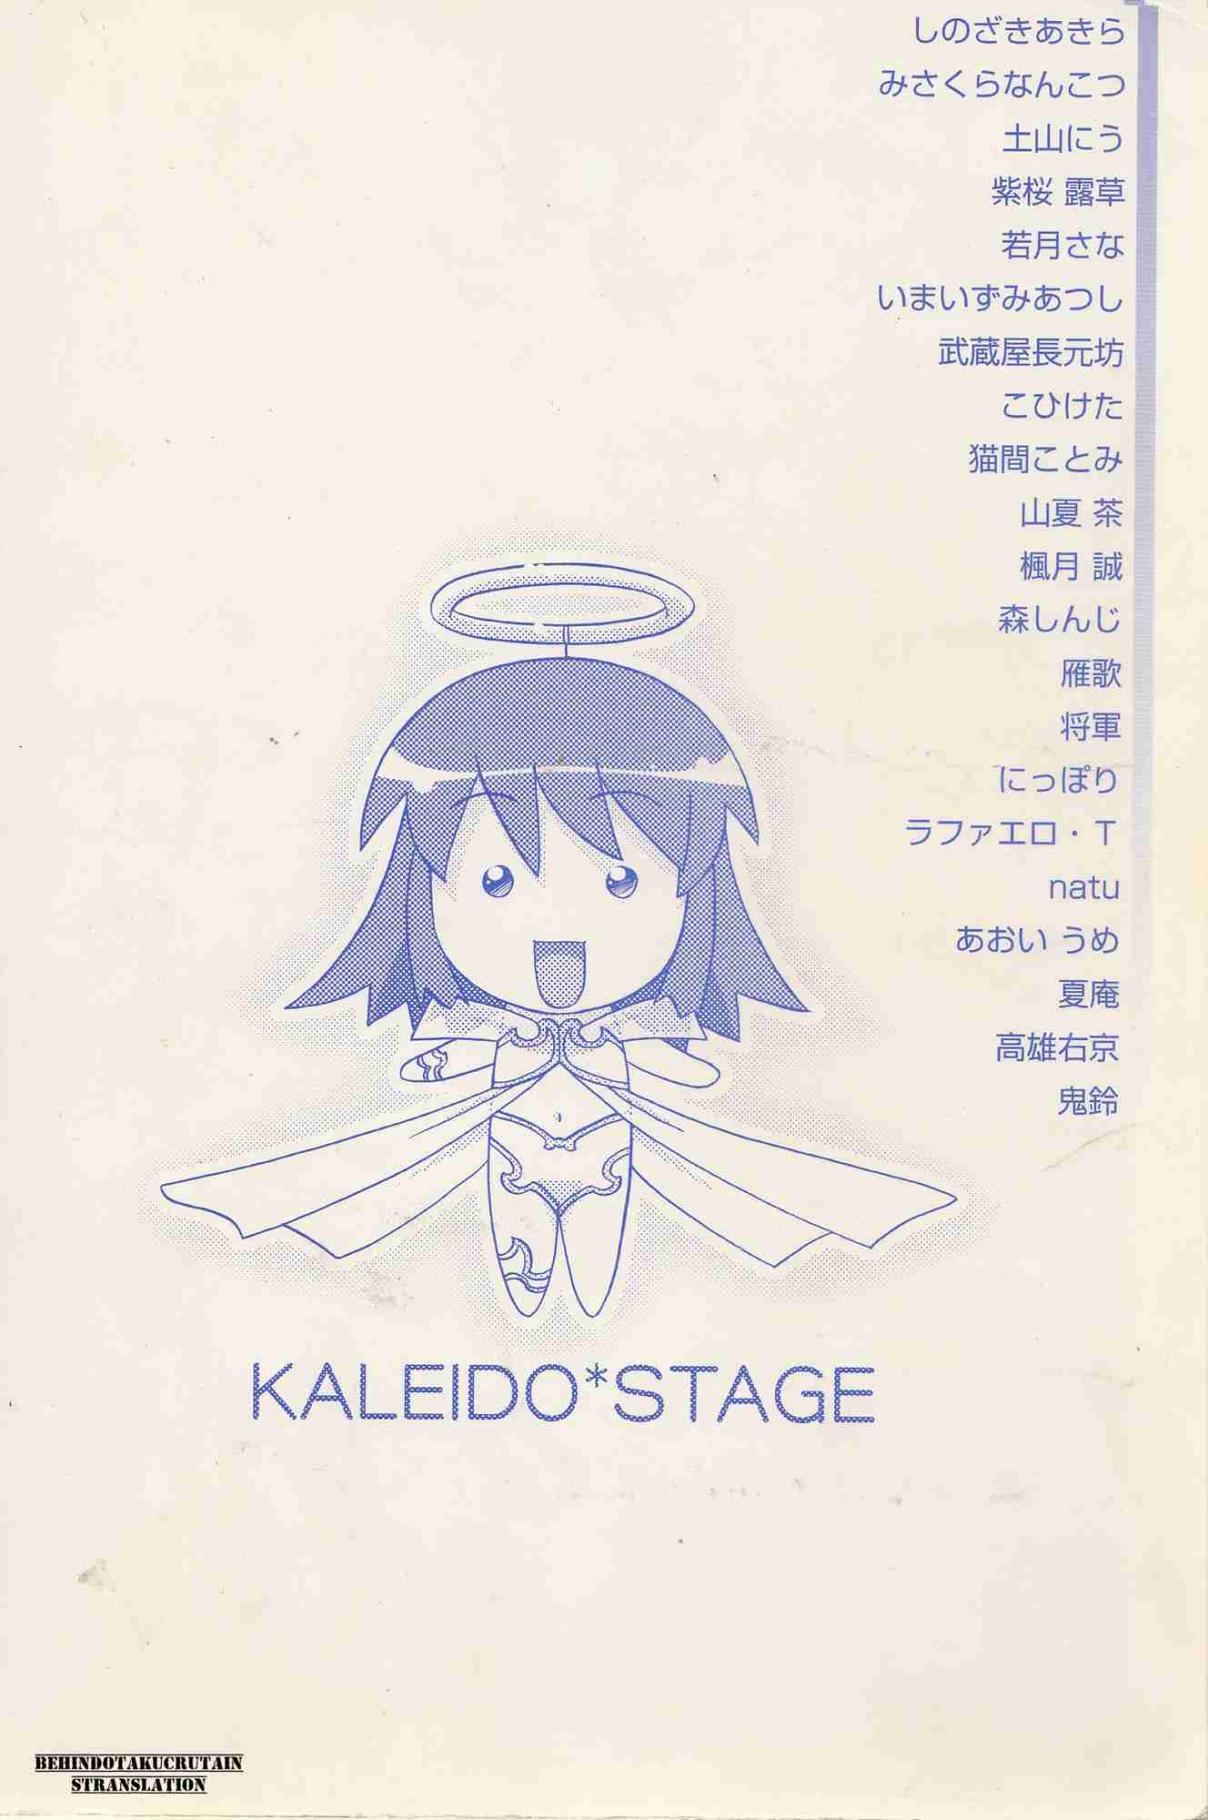 Kaleido star comic anthology Vol. 1 Ch. 1